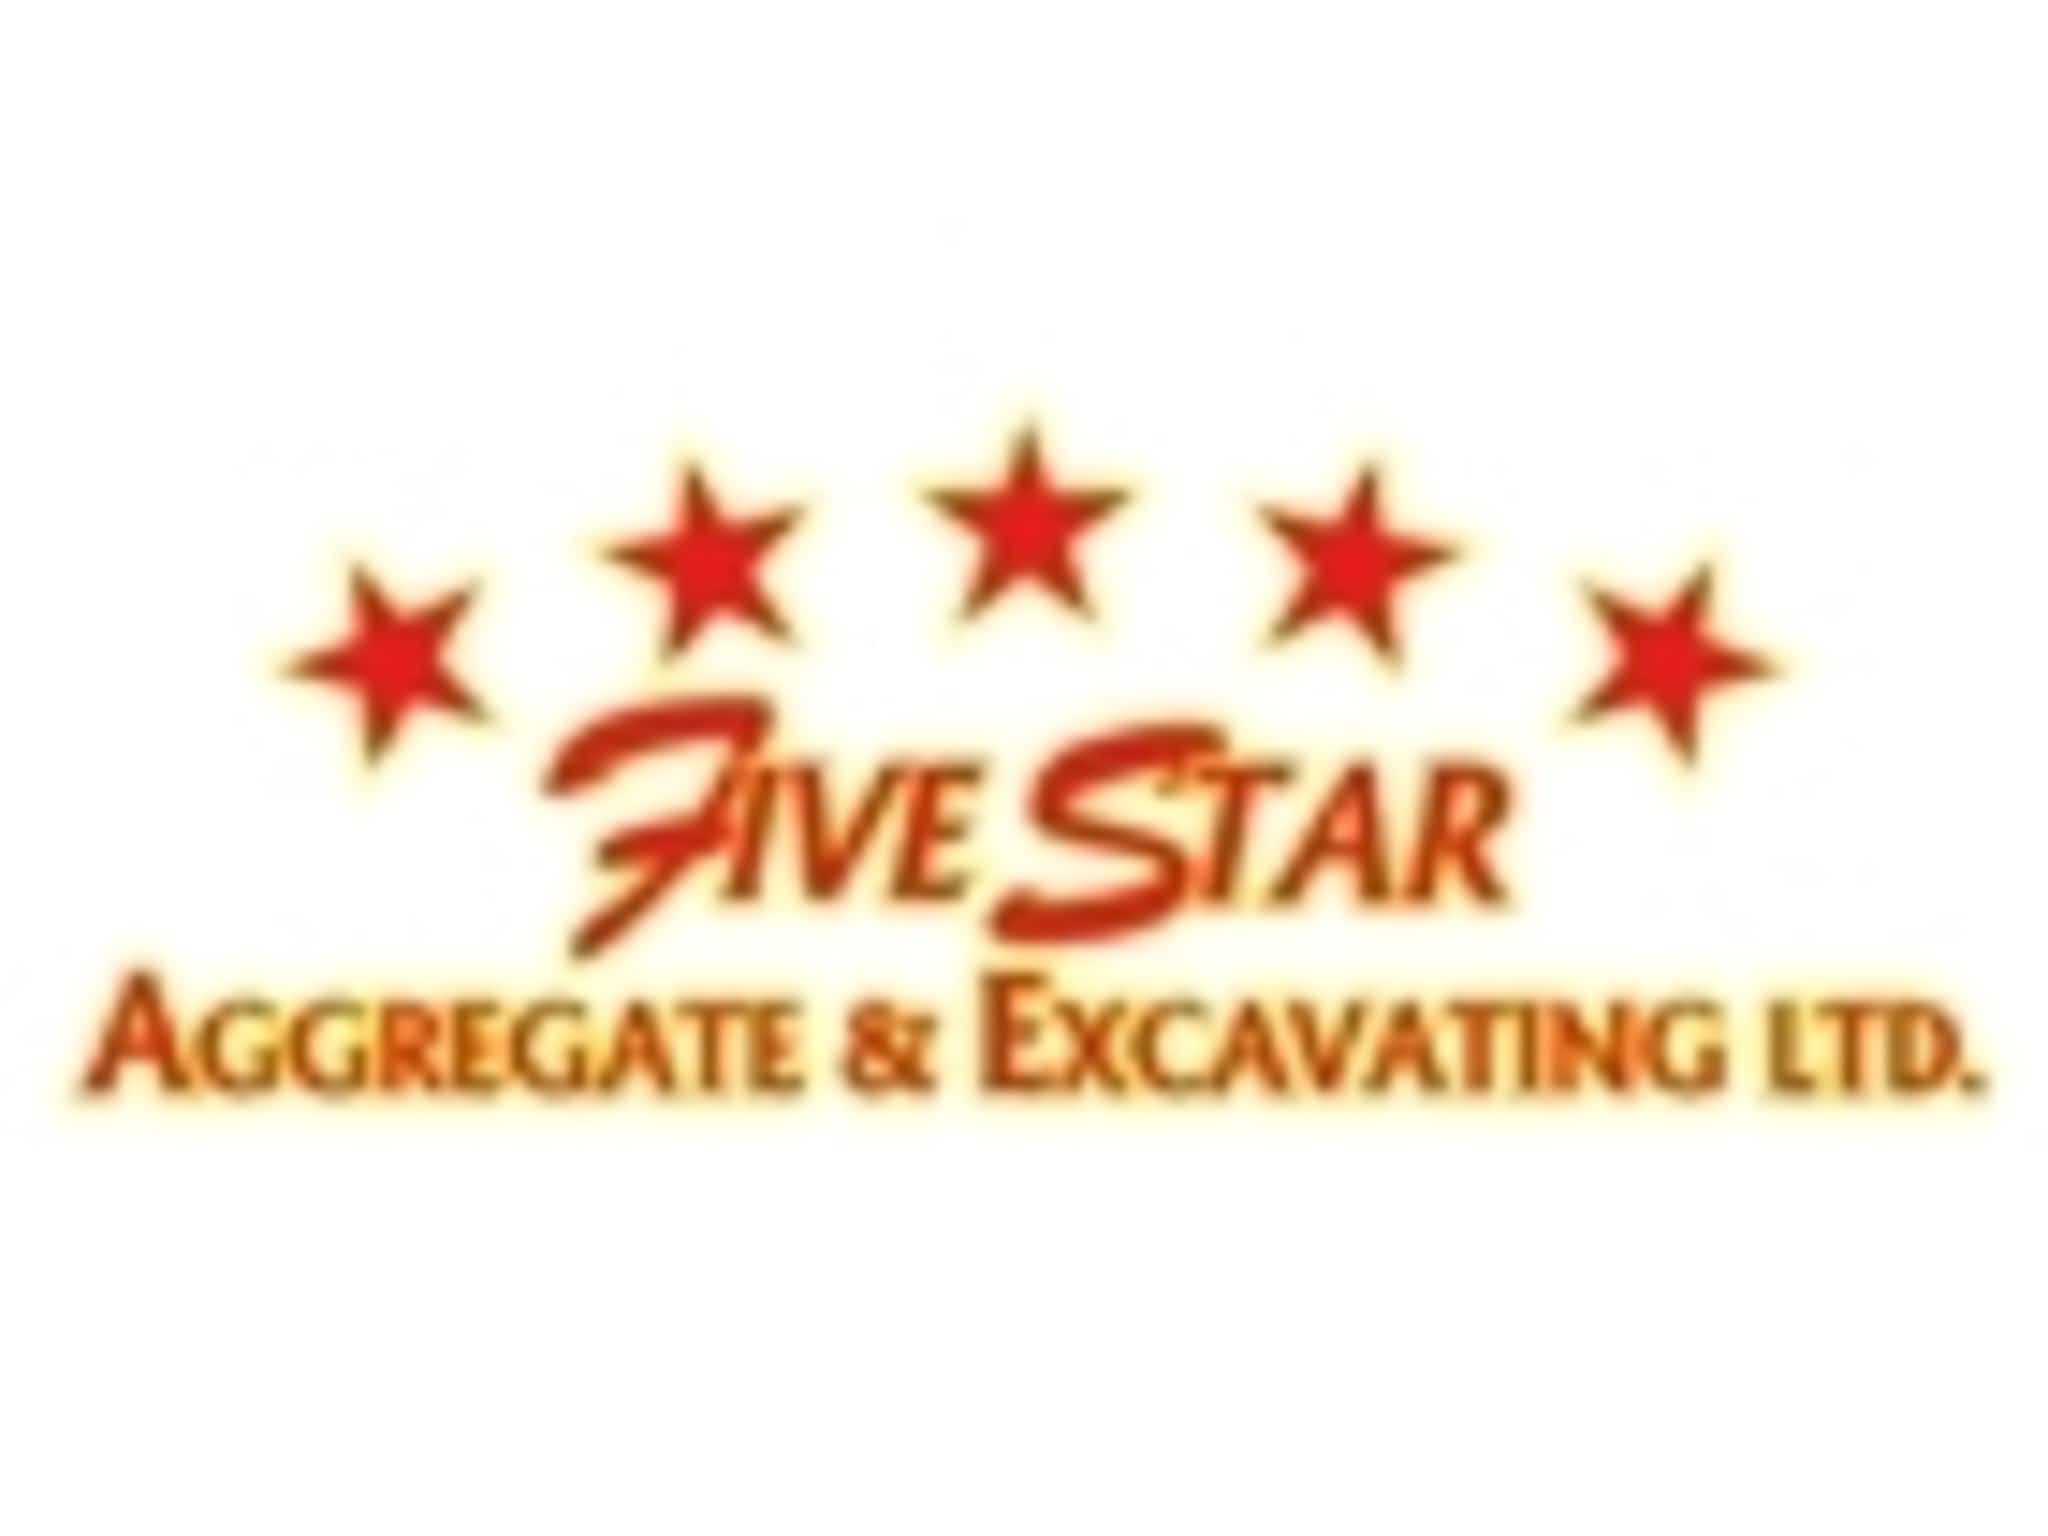 photo Five Star Aggregate & Excavating Ltd